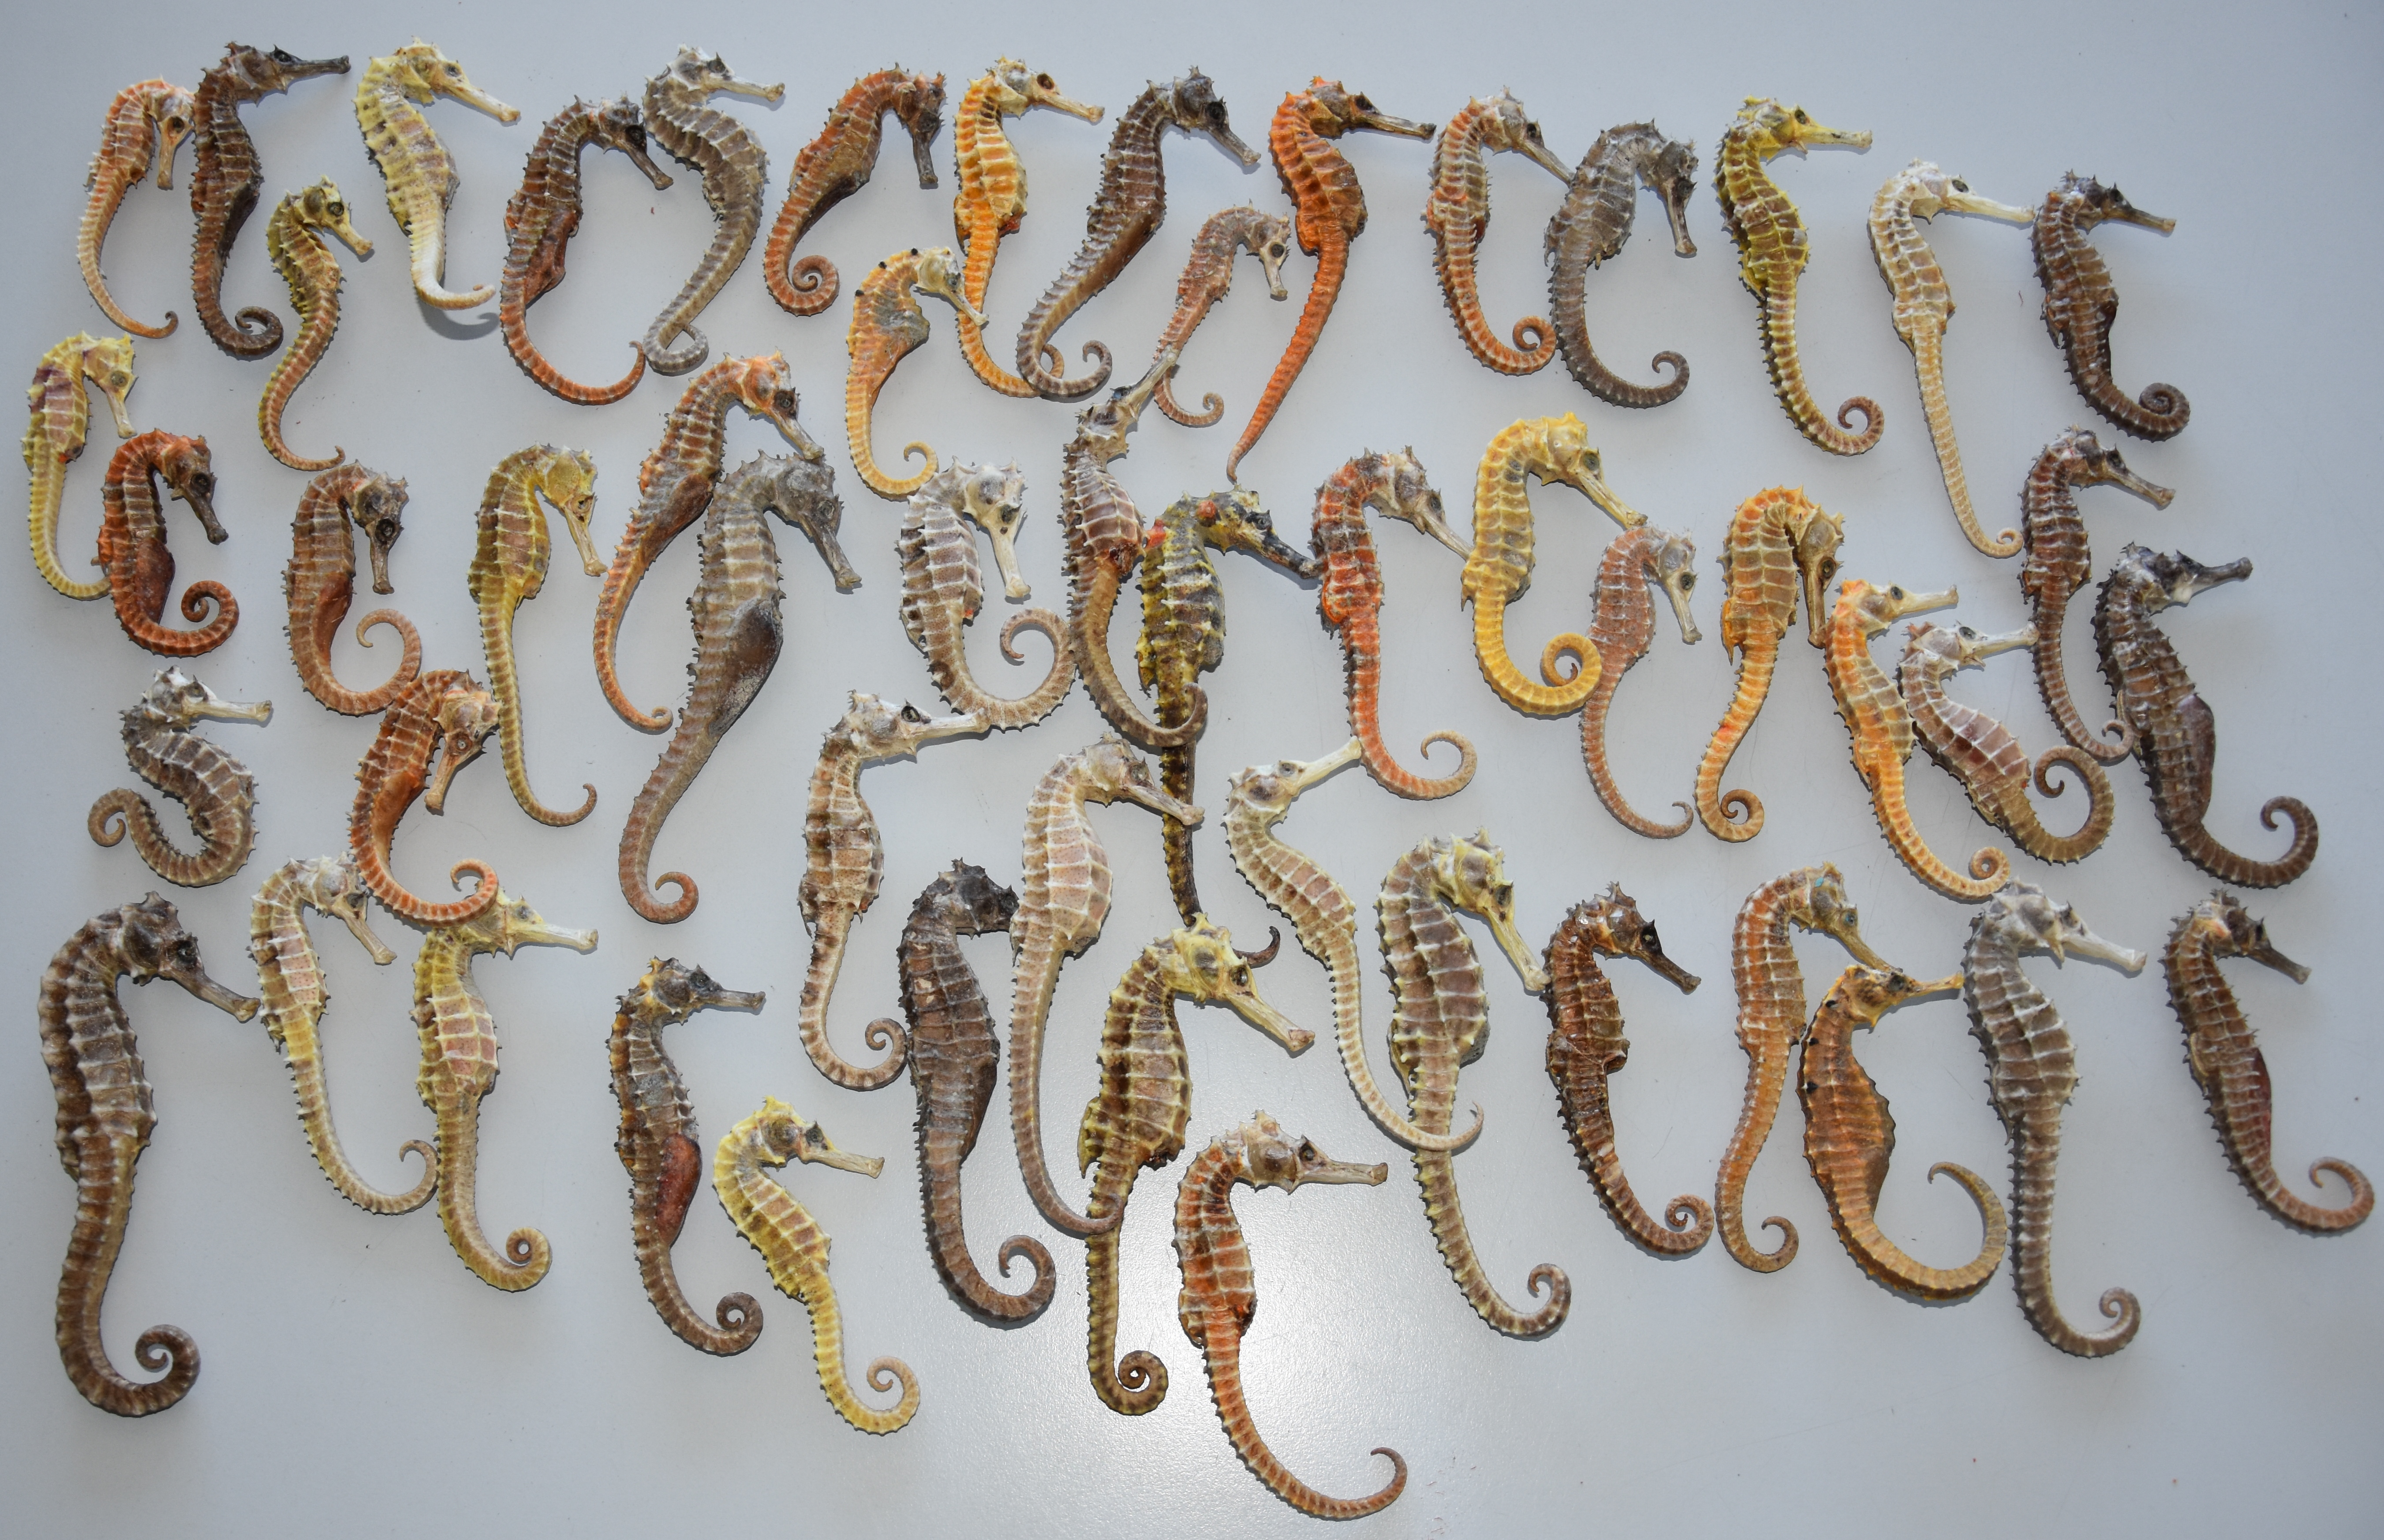 Florida Souvenir Anhänger mit Muscheln, Seegras, Seepferdchen